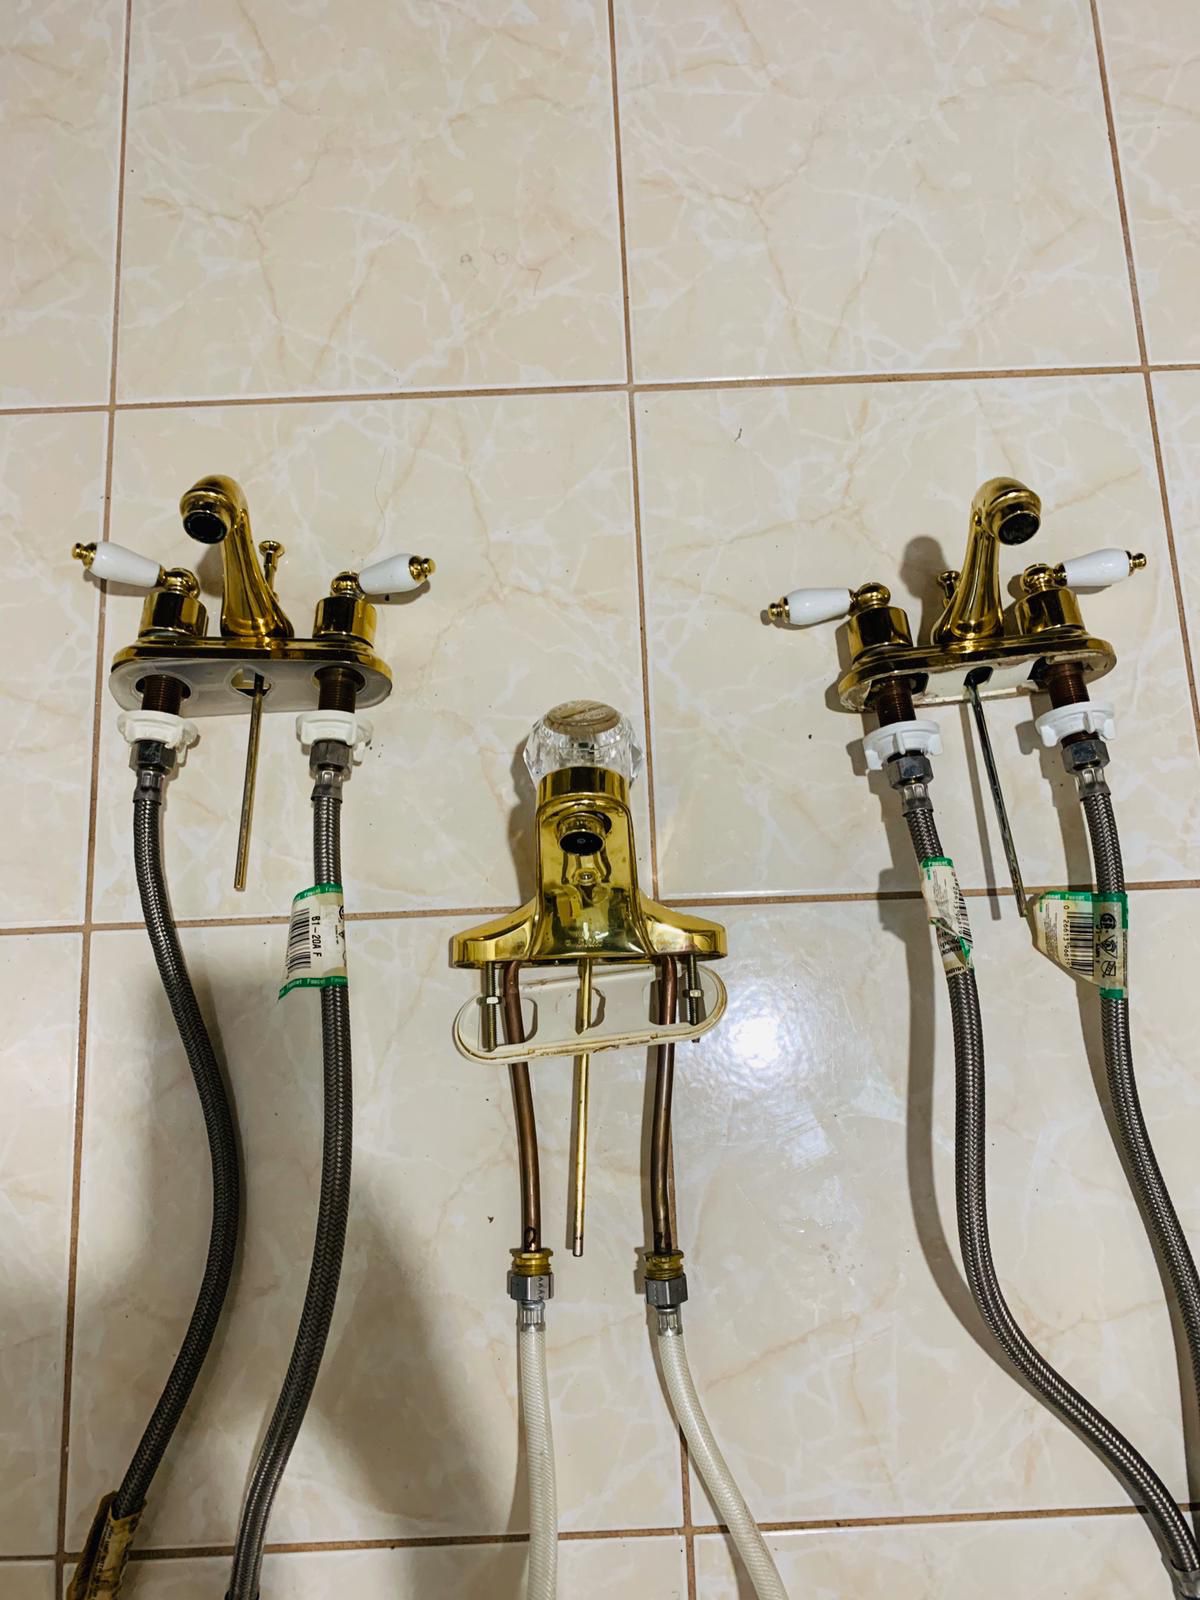 THREE Gold bathroom faucets